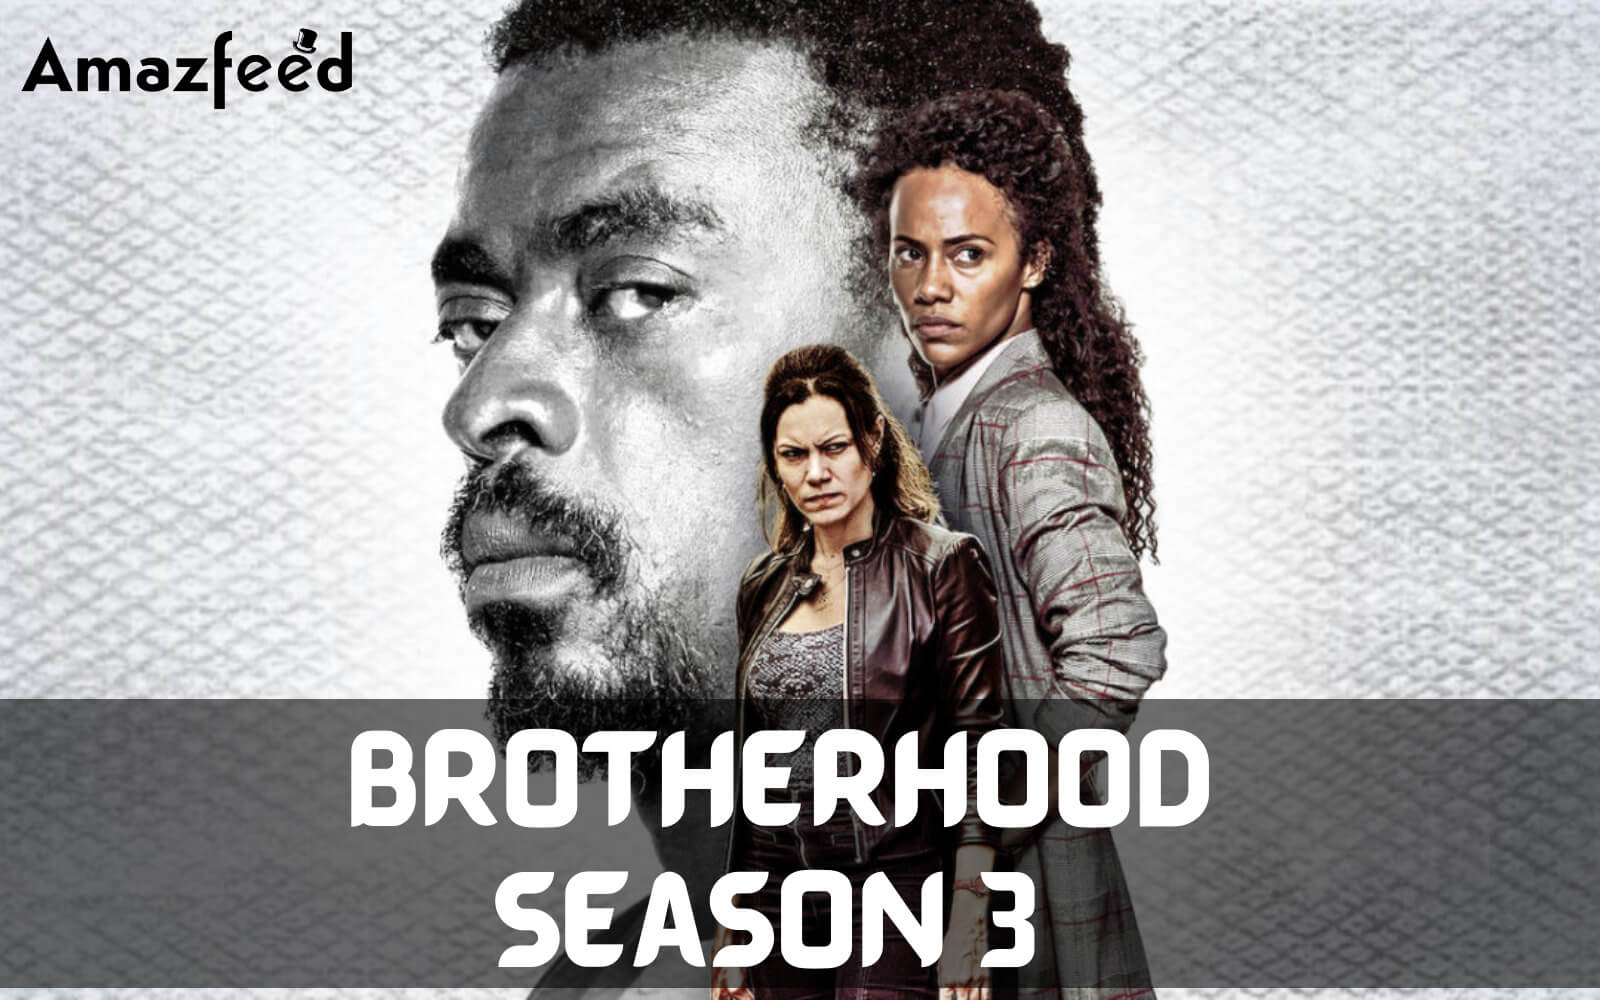 _Brotherhood Season 3 release date